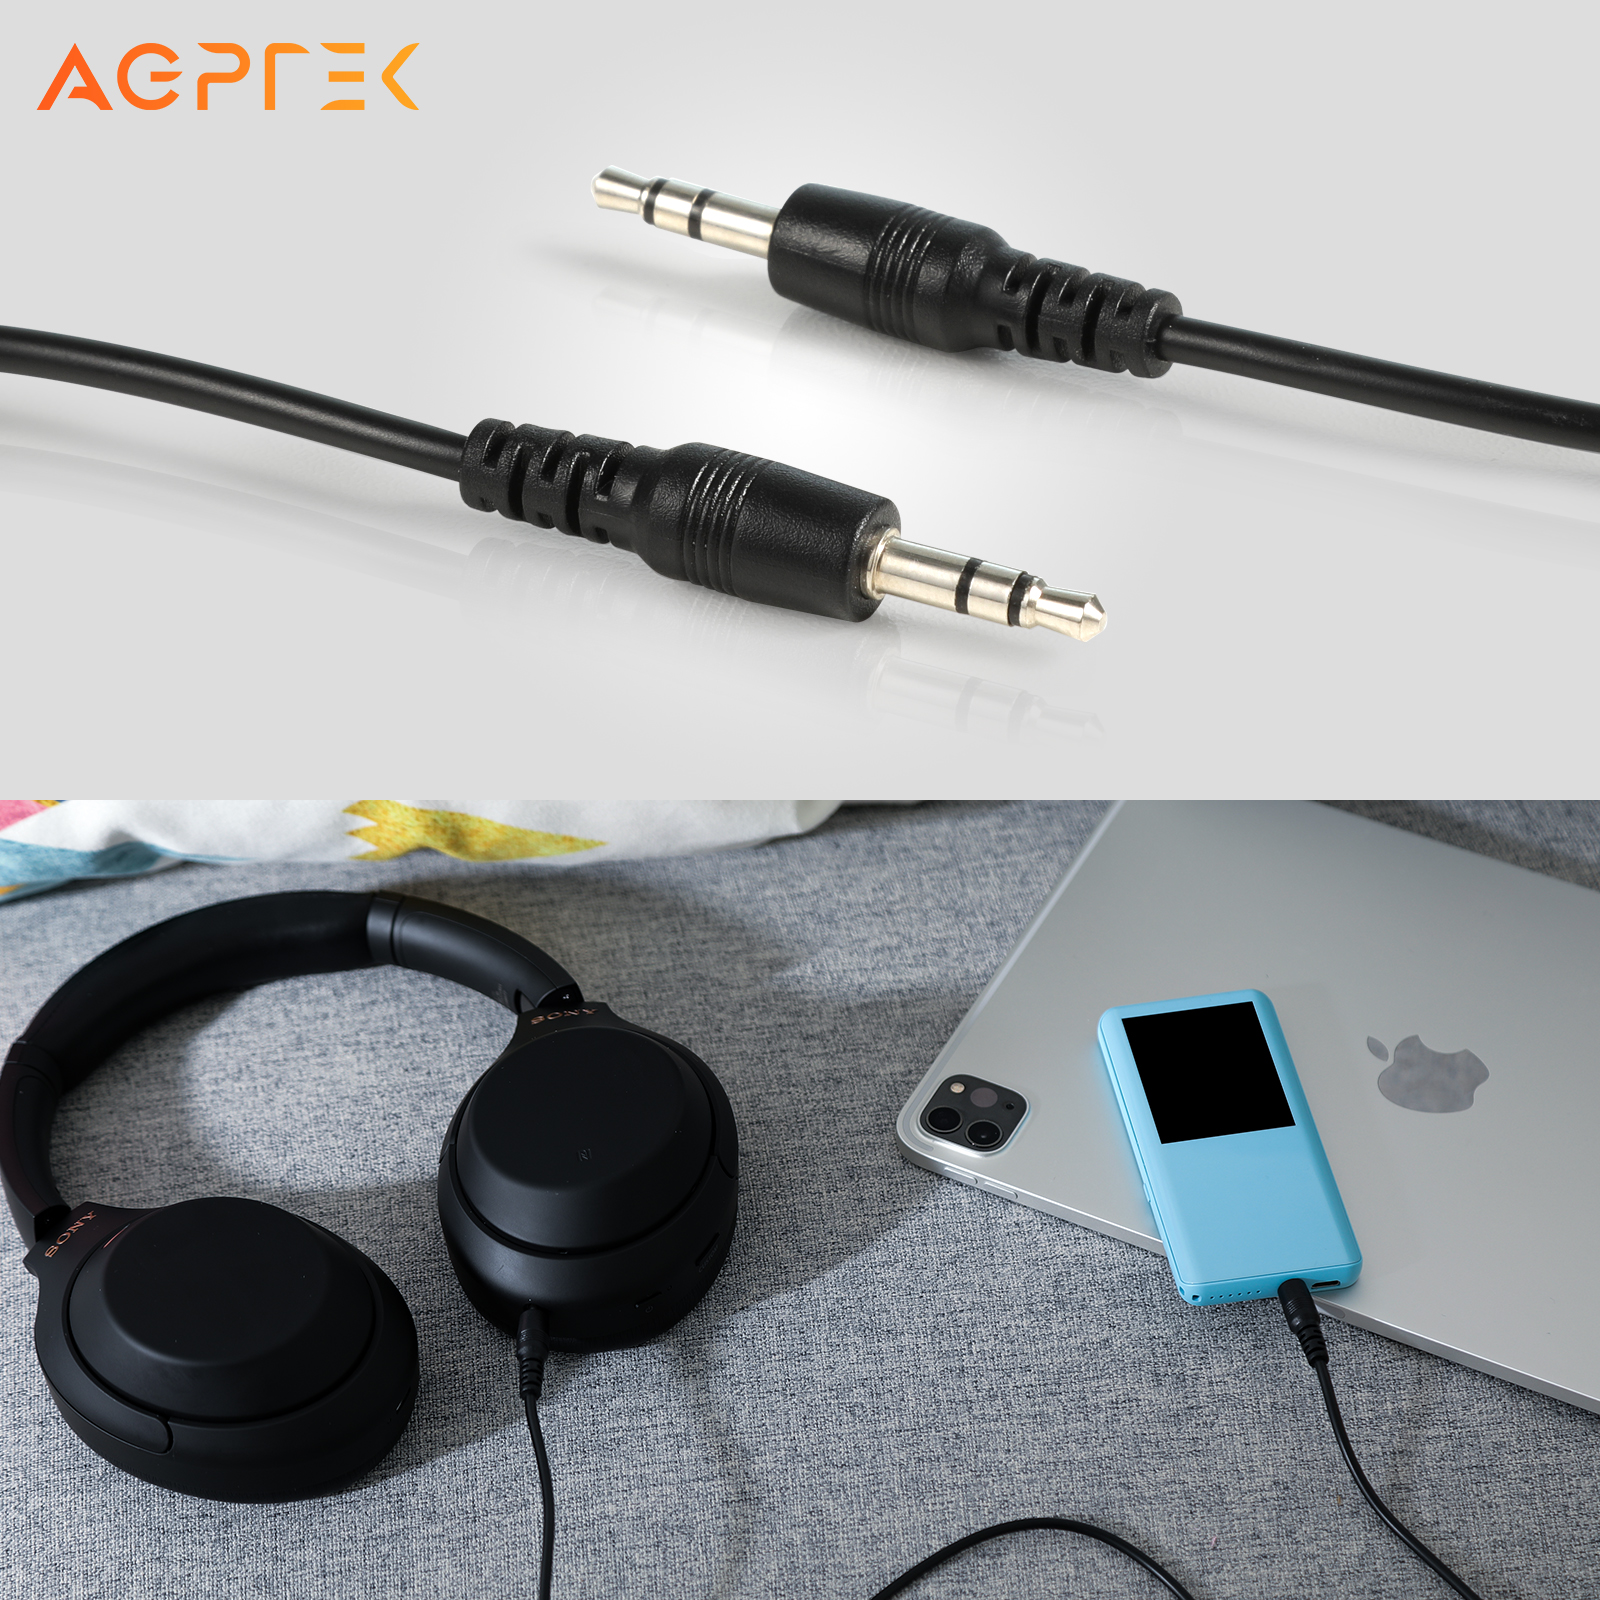 AGPTEK オーディオケーブル (3.5φステレオミニ) 1m ステレオケーブル 4極 AUDIOケーブル AUXケーブル 3.5mm オスオス 高音質 高耐久性 PVC  互換性 プレーヤー、ヘッドホン、スピーカー、音響、車、iPhone、iPad、iPod、PCなどに対応 ダイレクト 録音 ケーブル